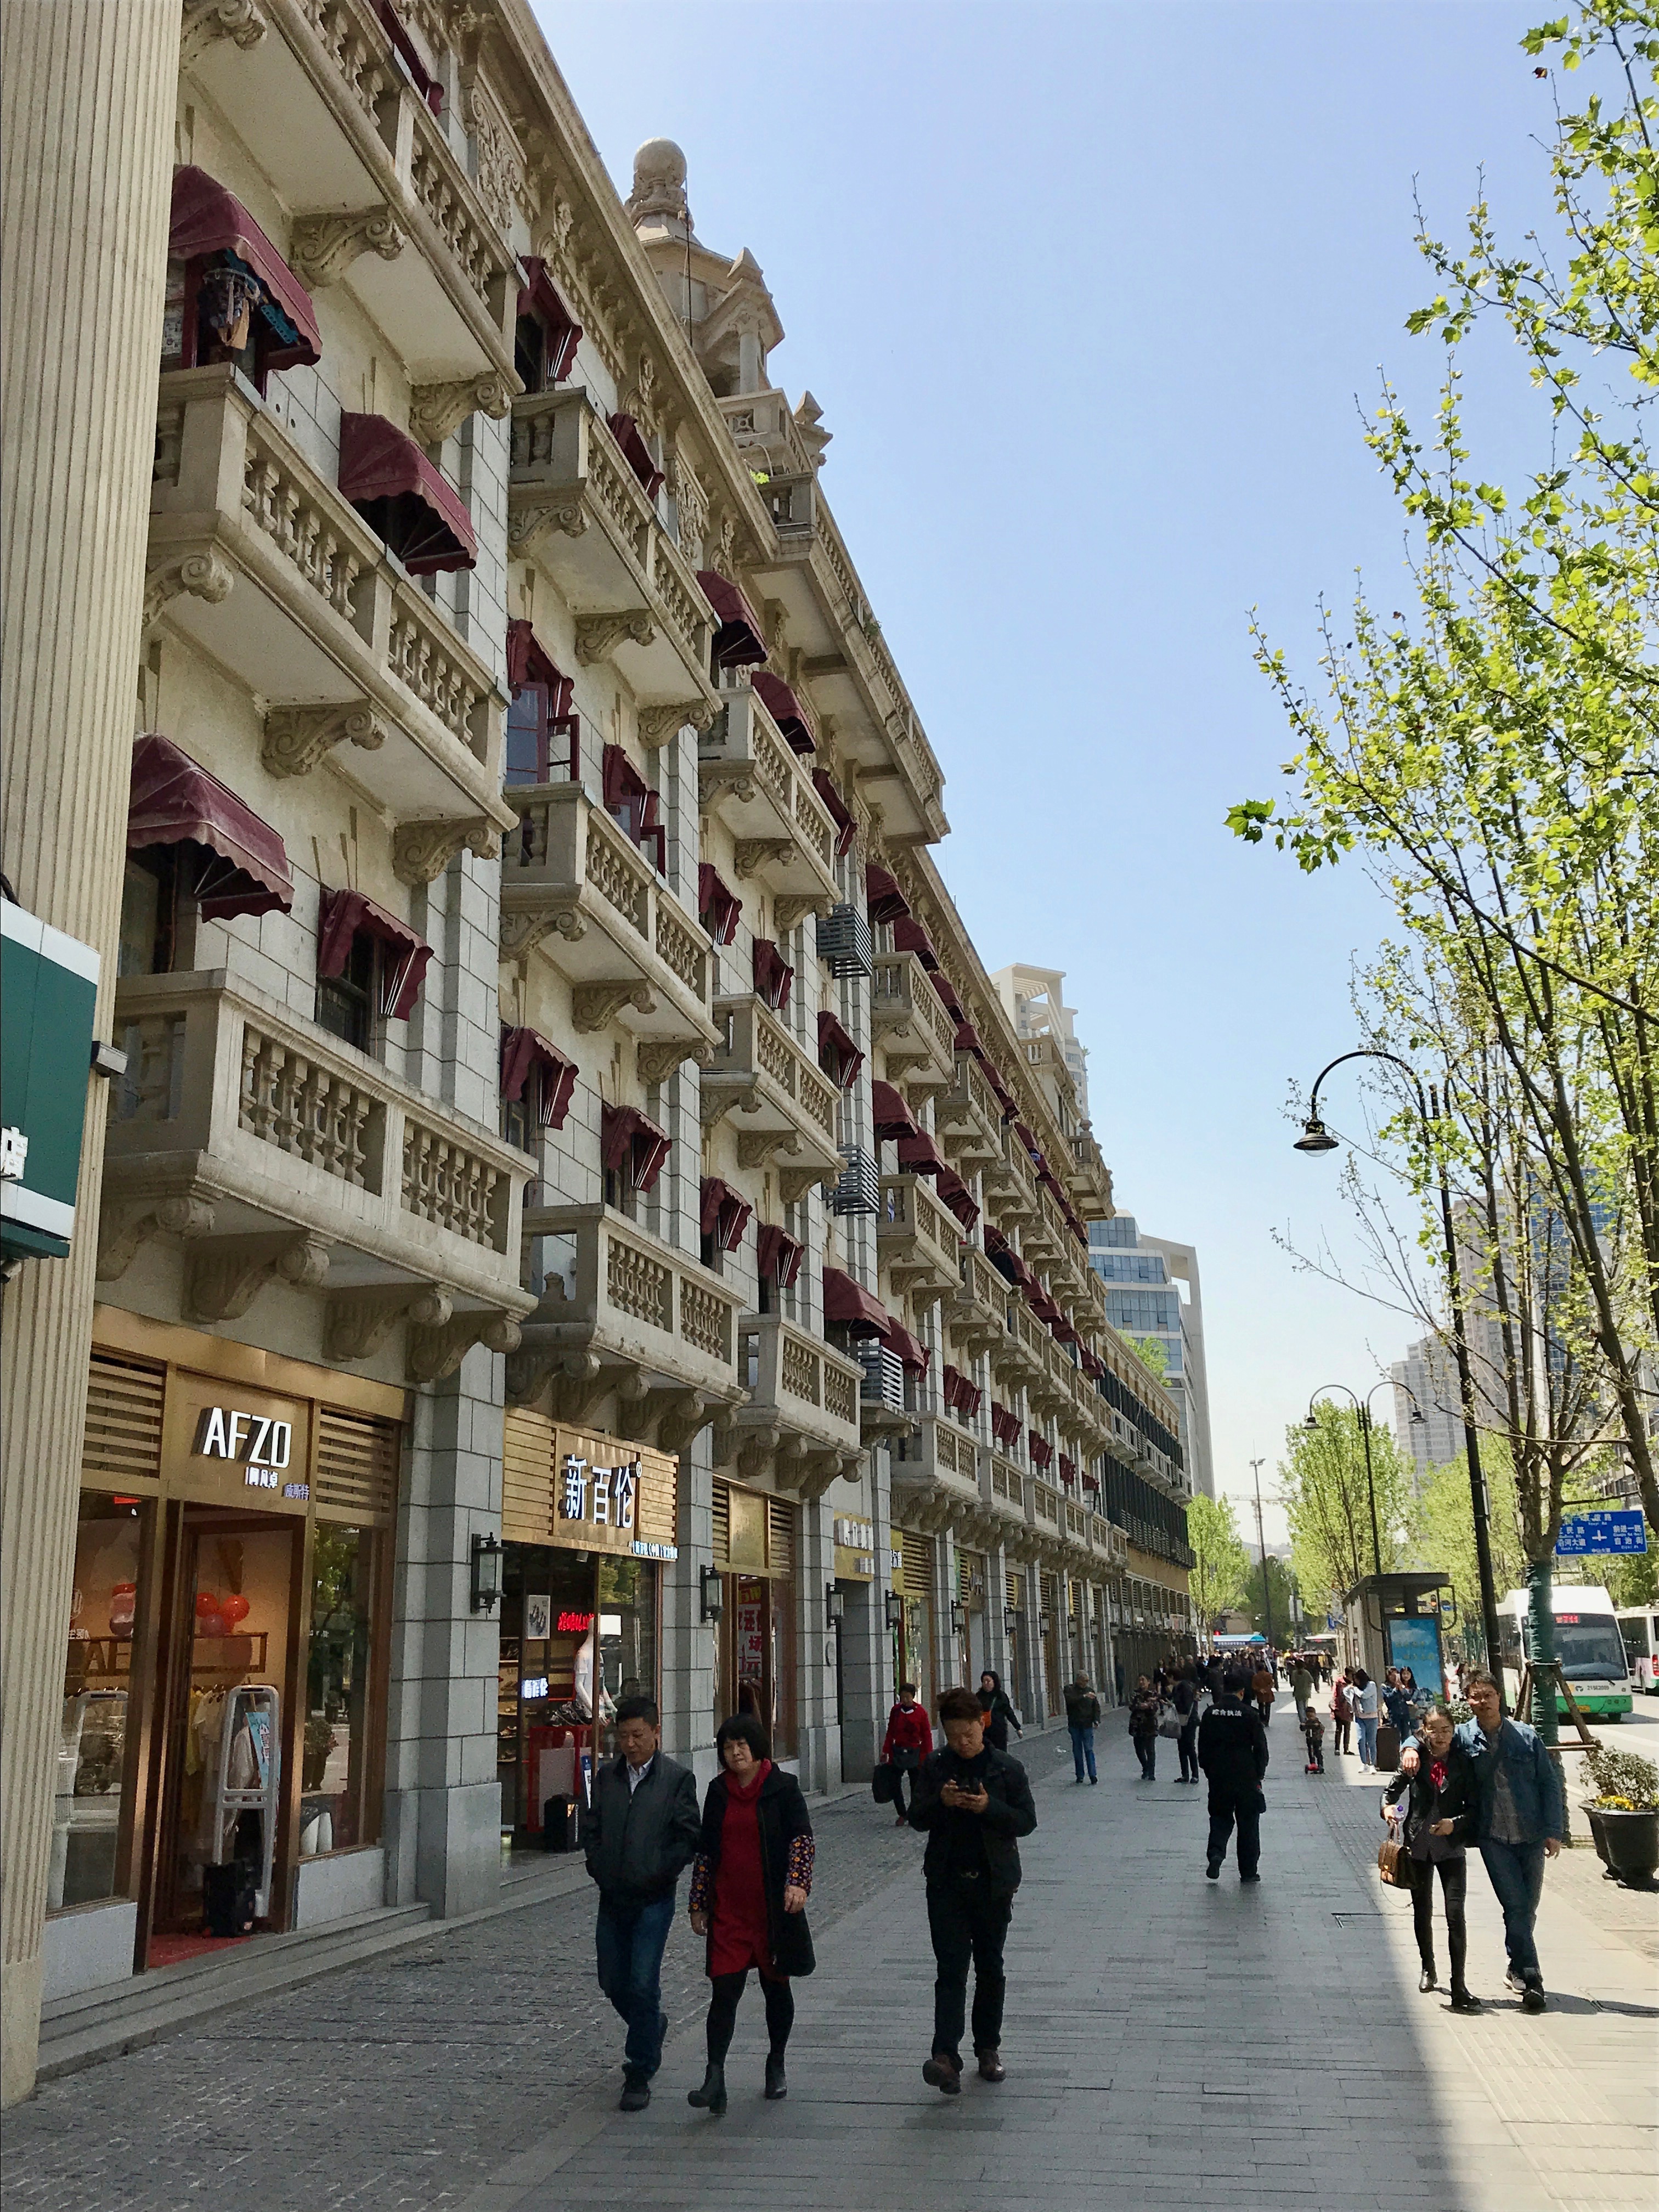 European architecture is prominent along Zhongshan Avenue (Photo: Carl Hooks)